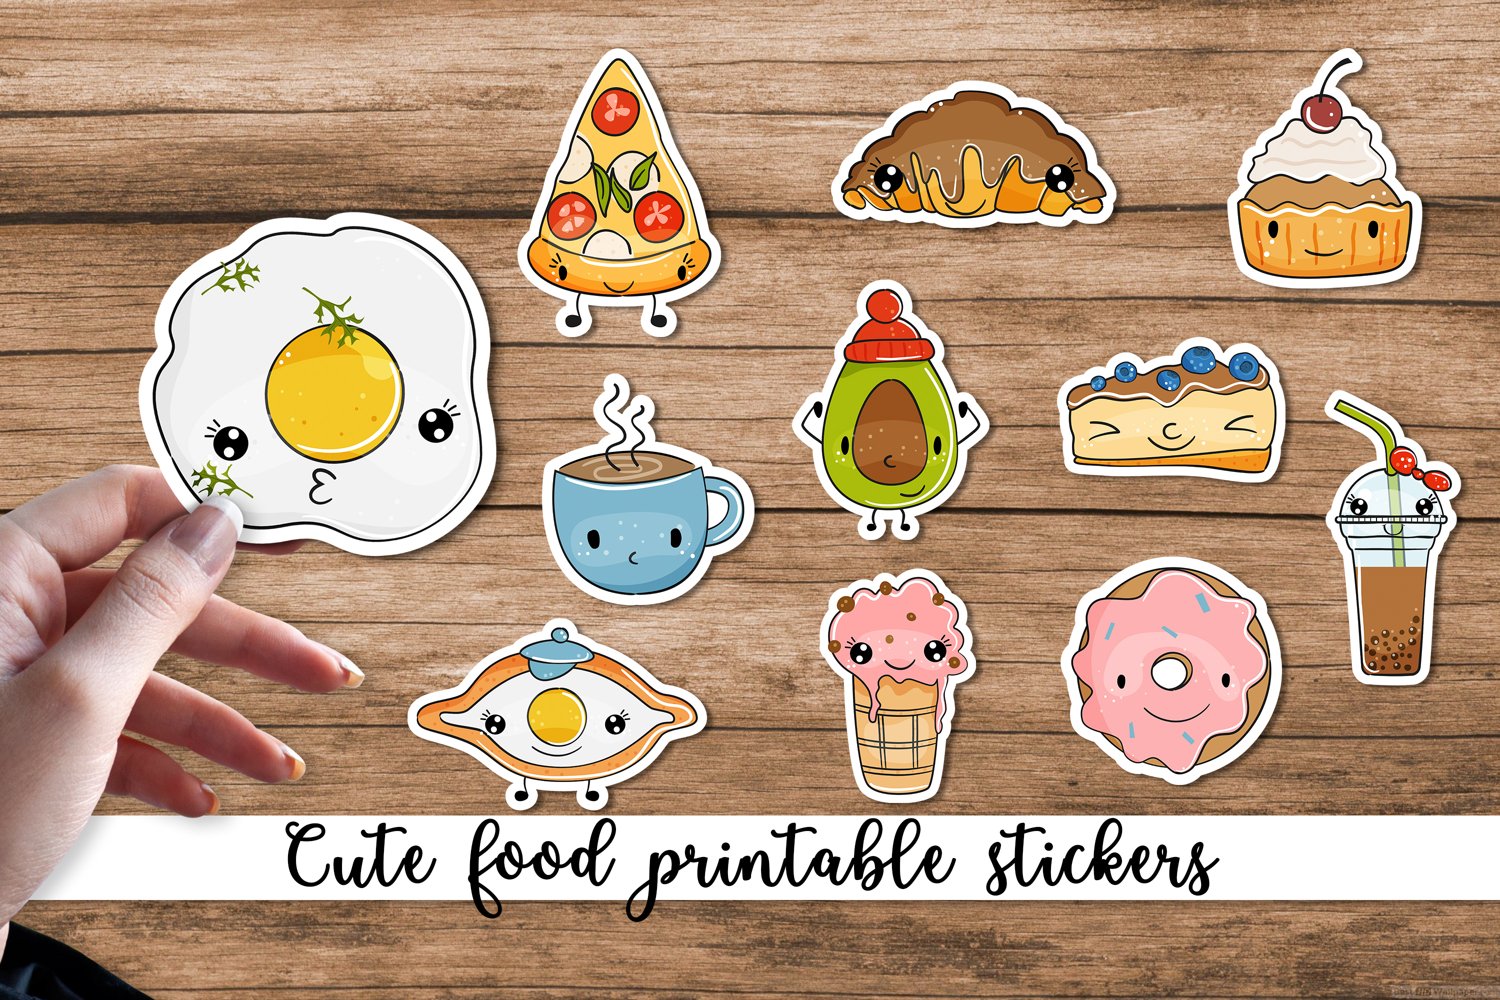 Cute food printable stickers.